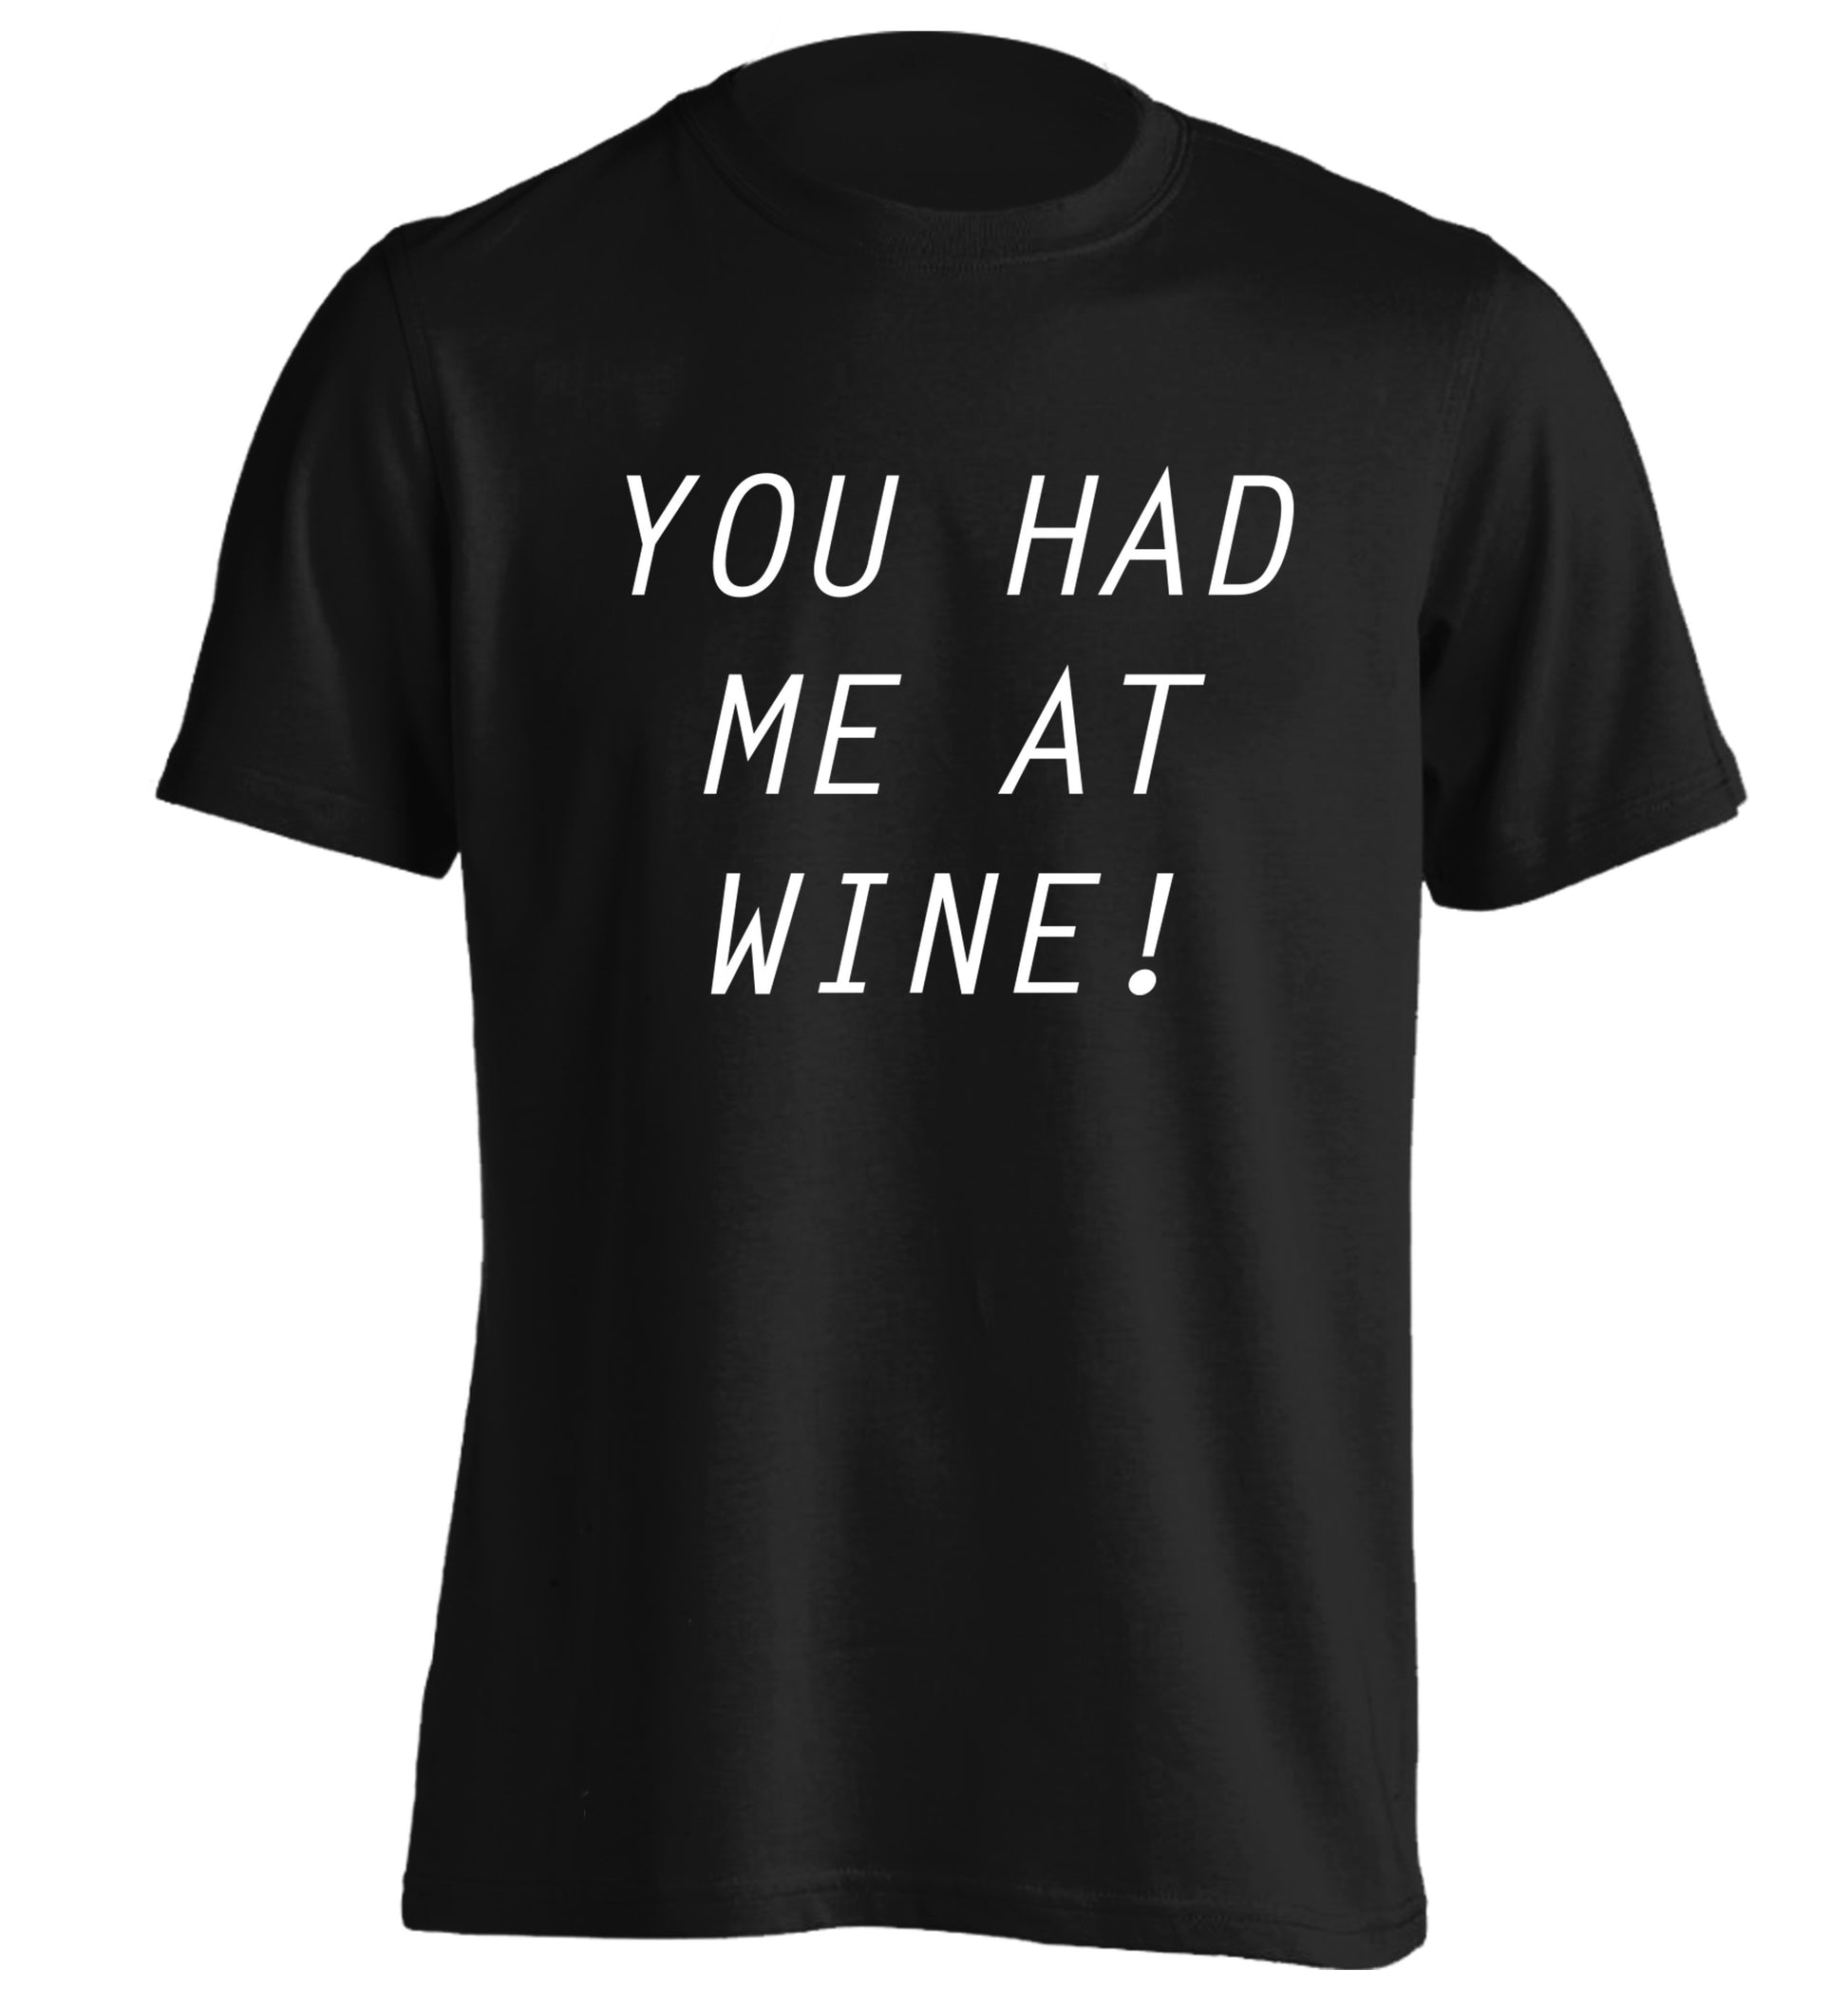 You had me at wine adults unisex black Tshirt 2XL